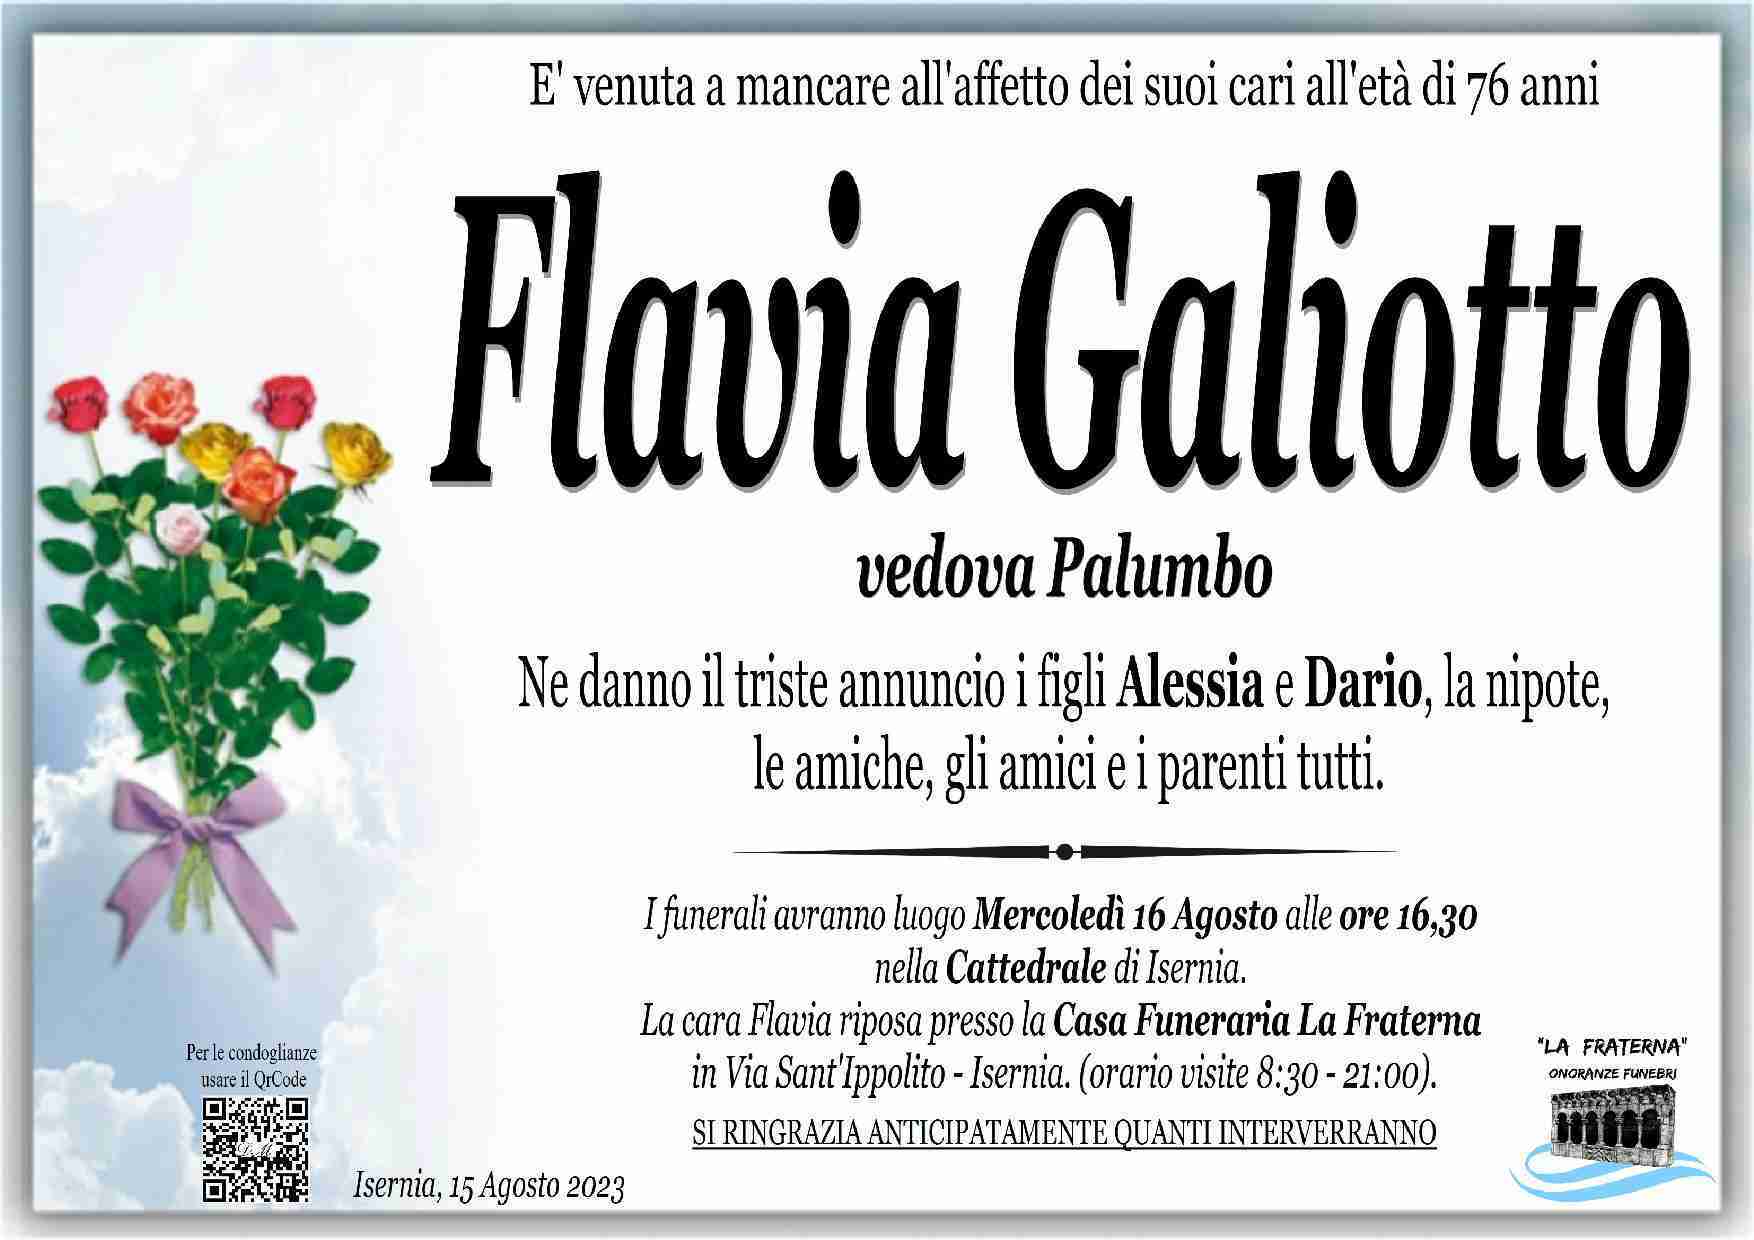 Flavia Galiotto